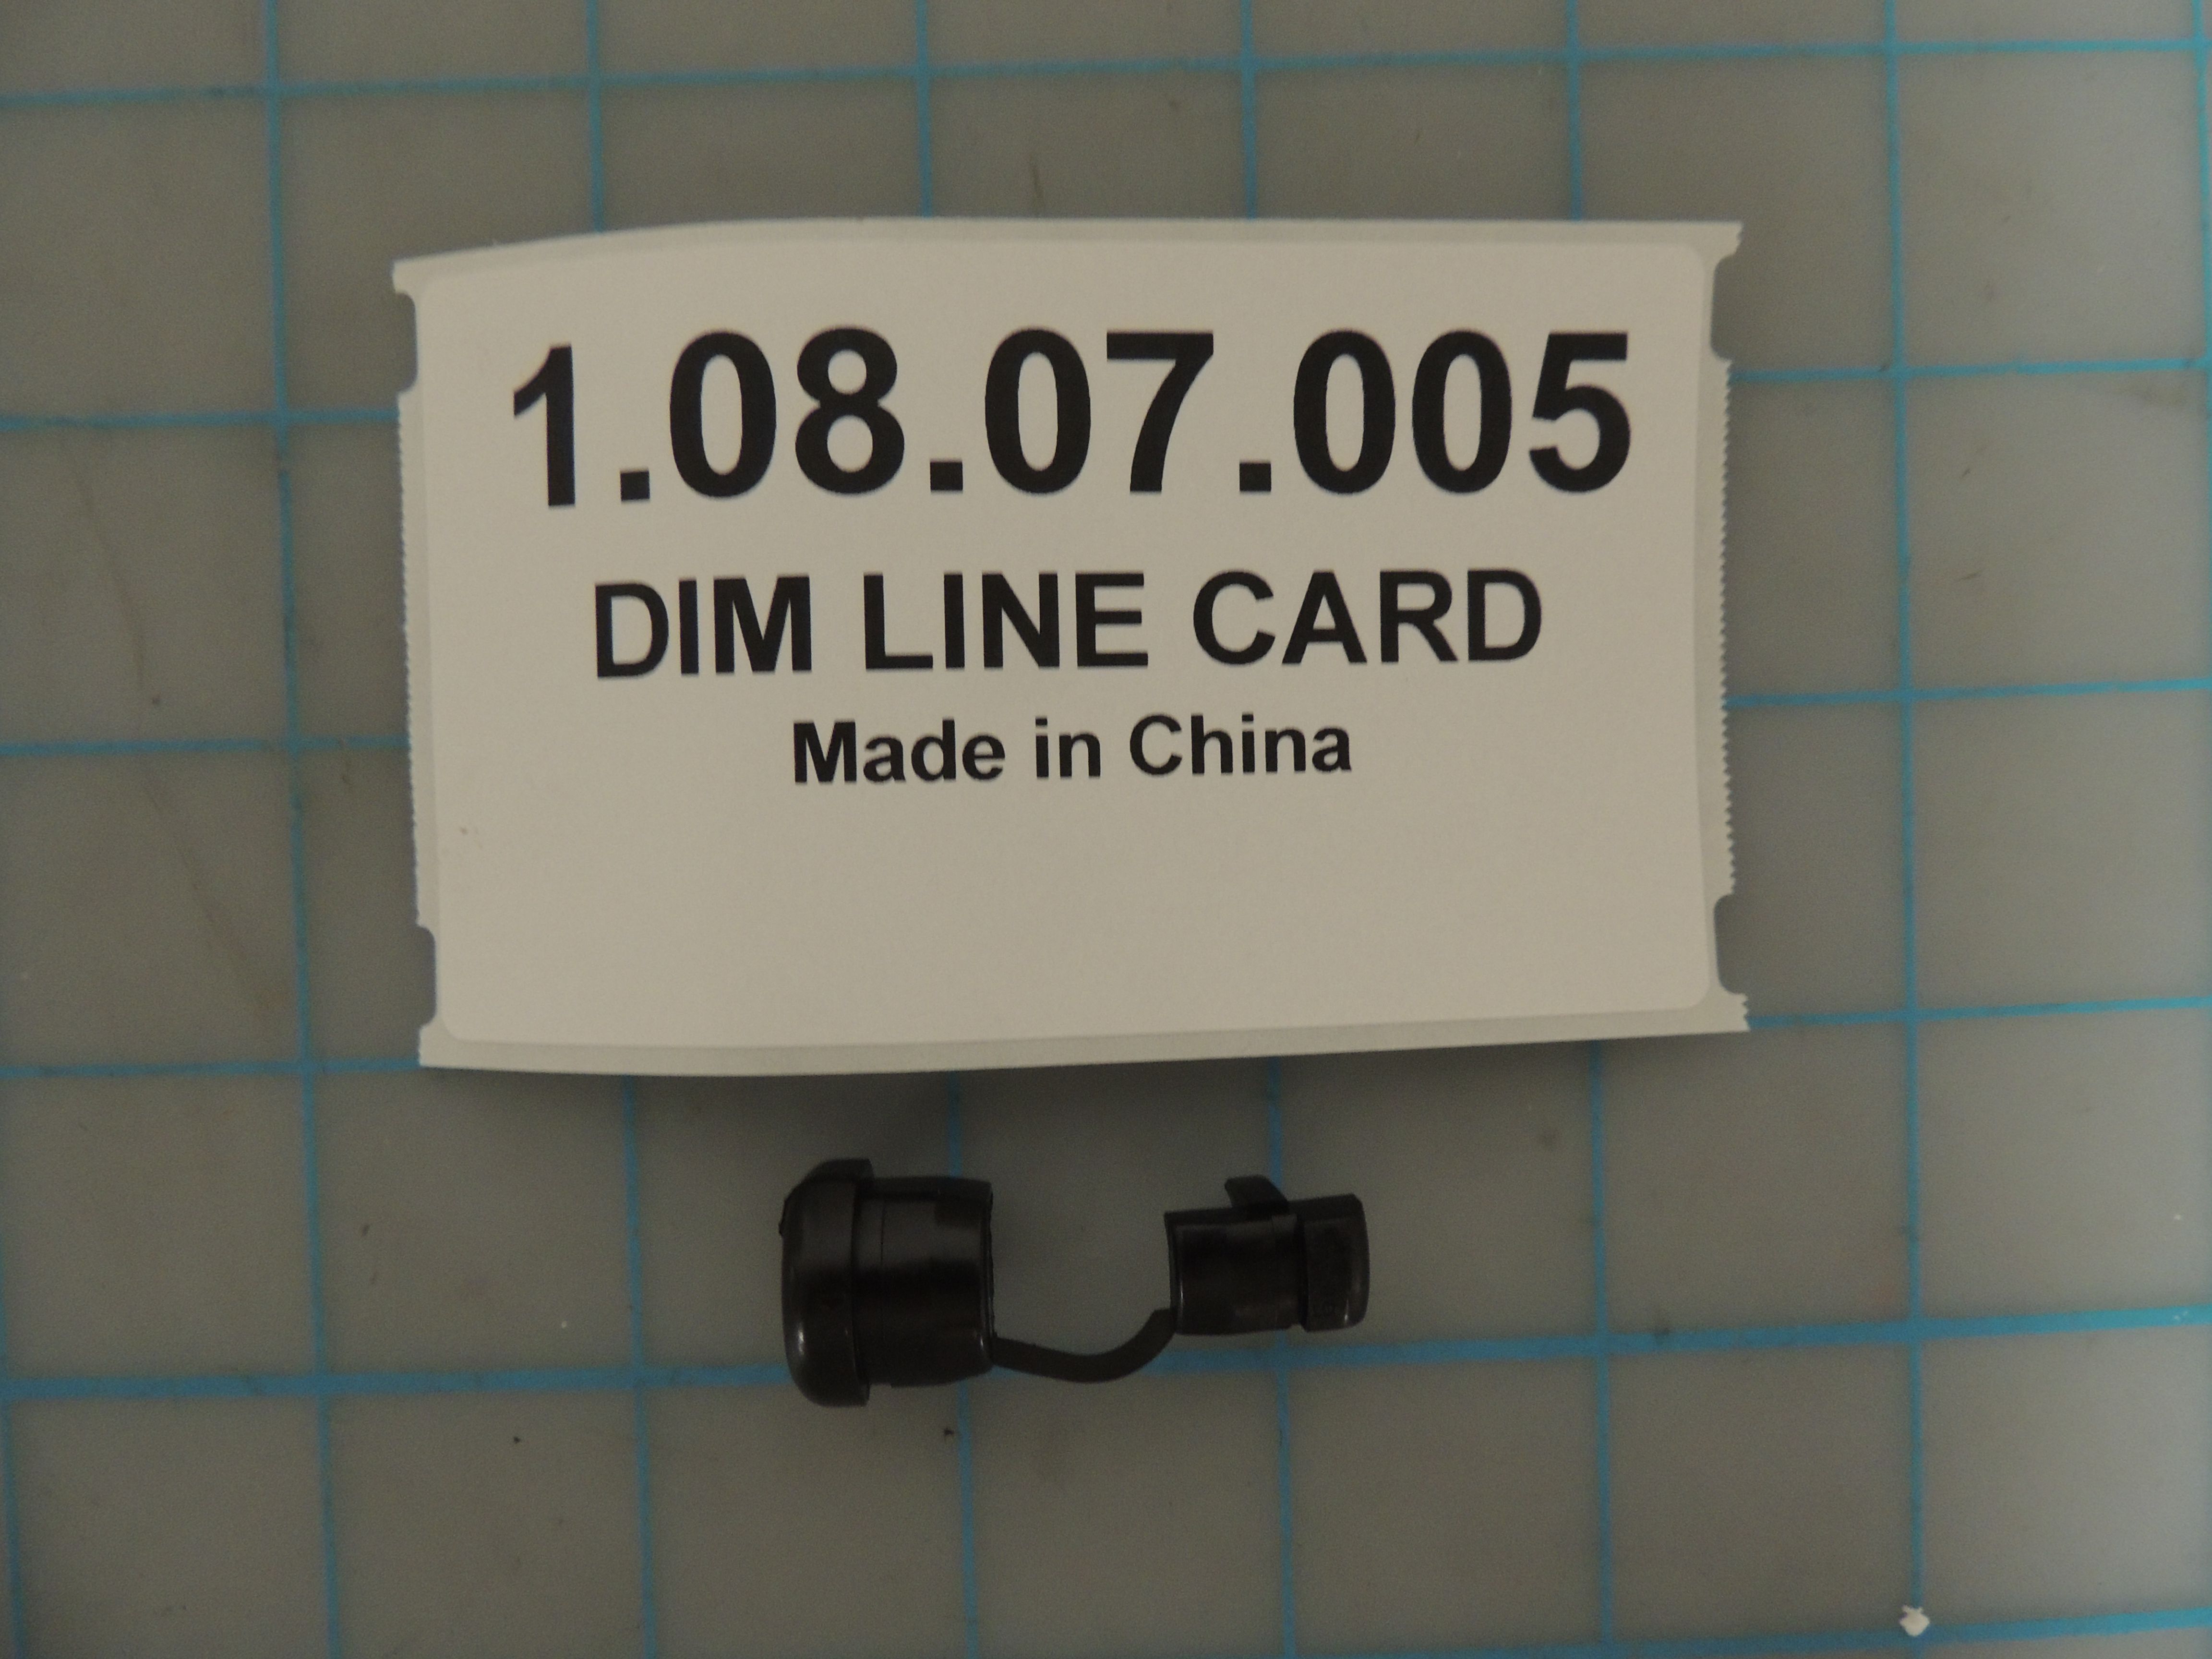 DIM LINE CARD